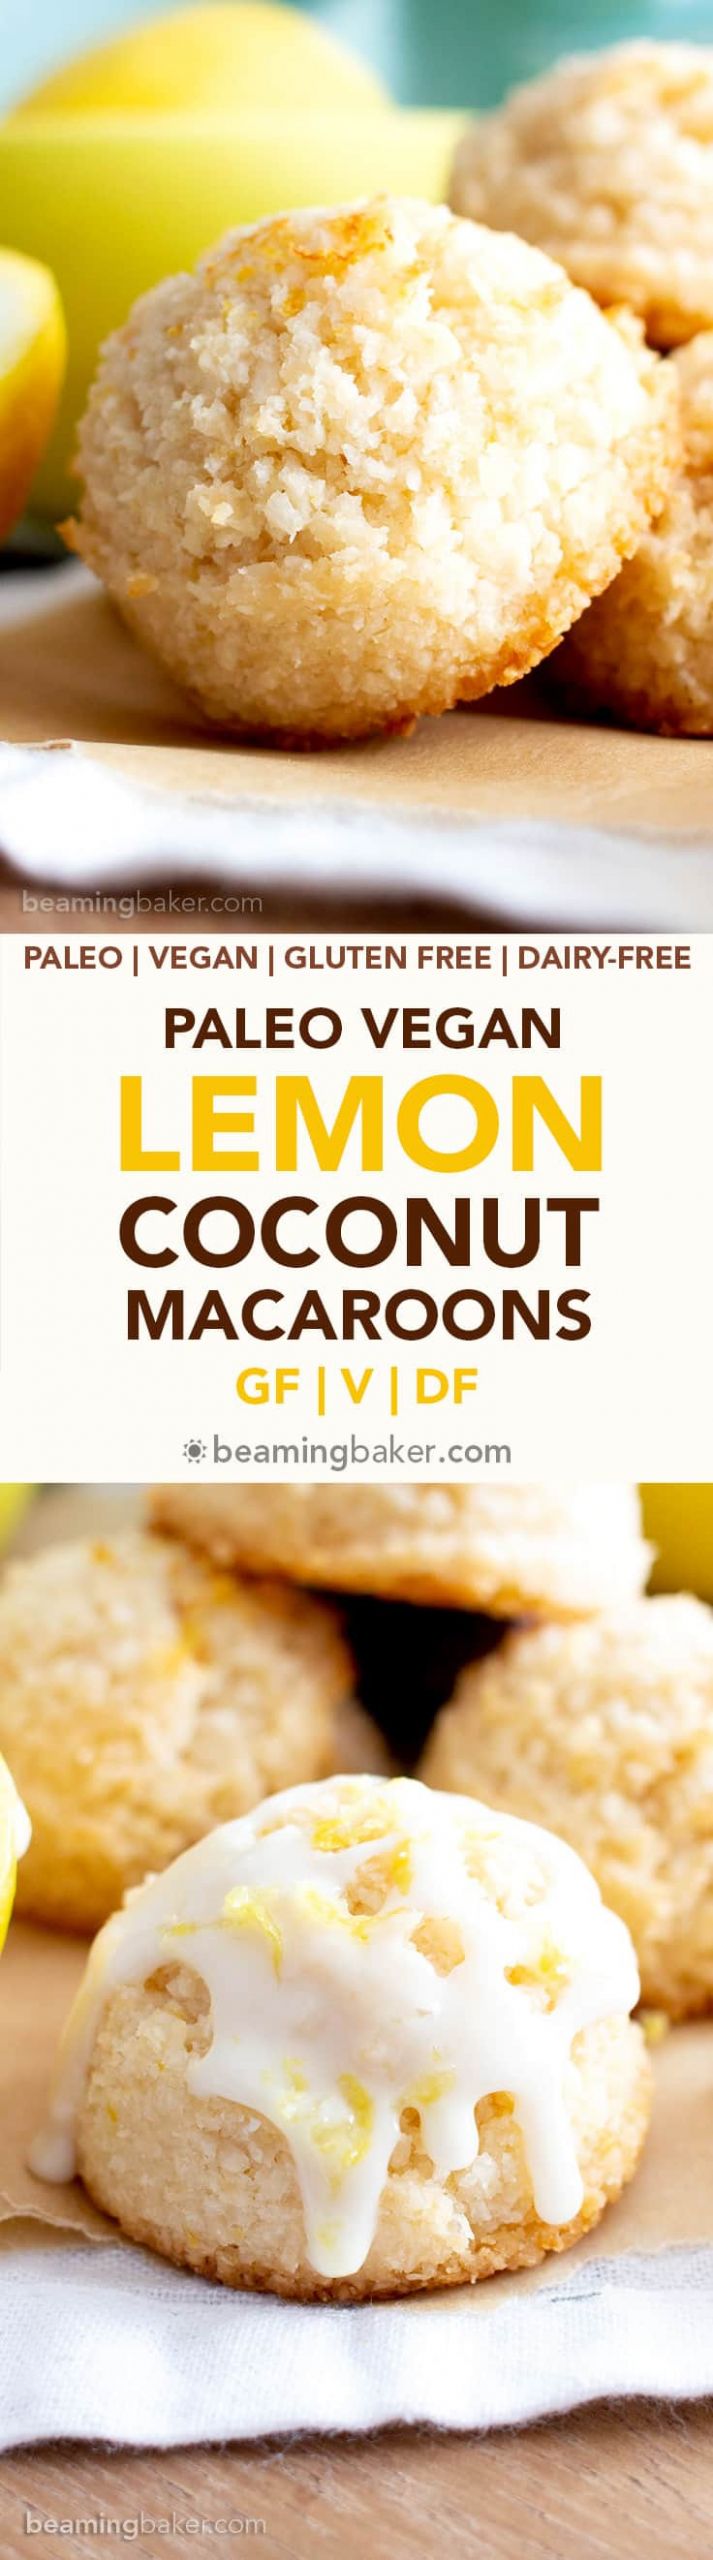 Dairy Free Macaroons
 Lemon Coconut Macaroons Recipe Vegan Paleo Gluten Free